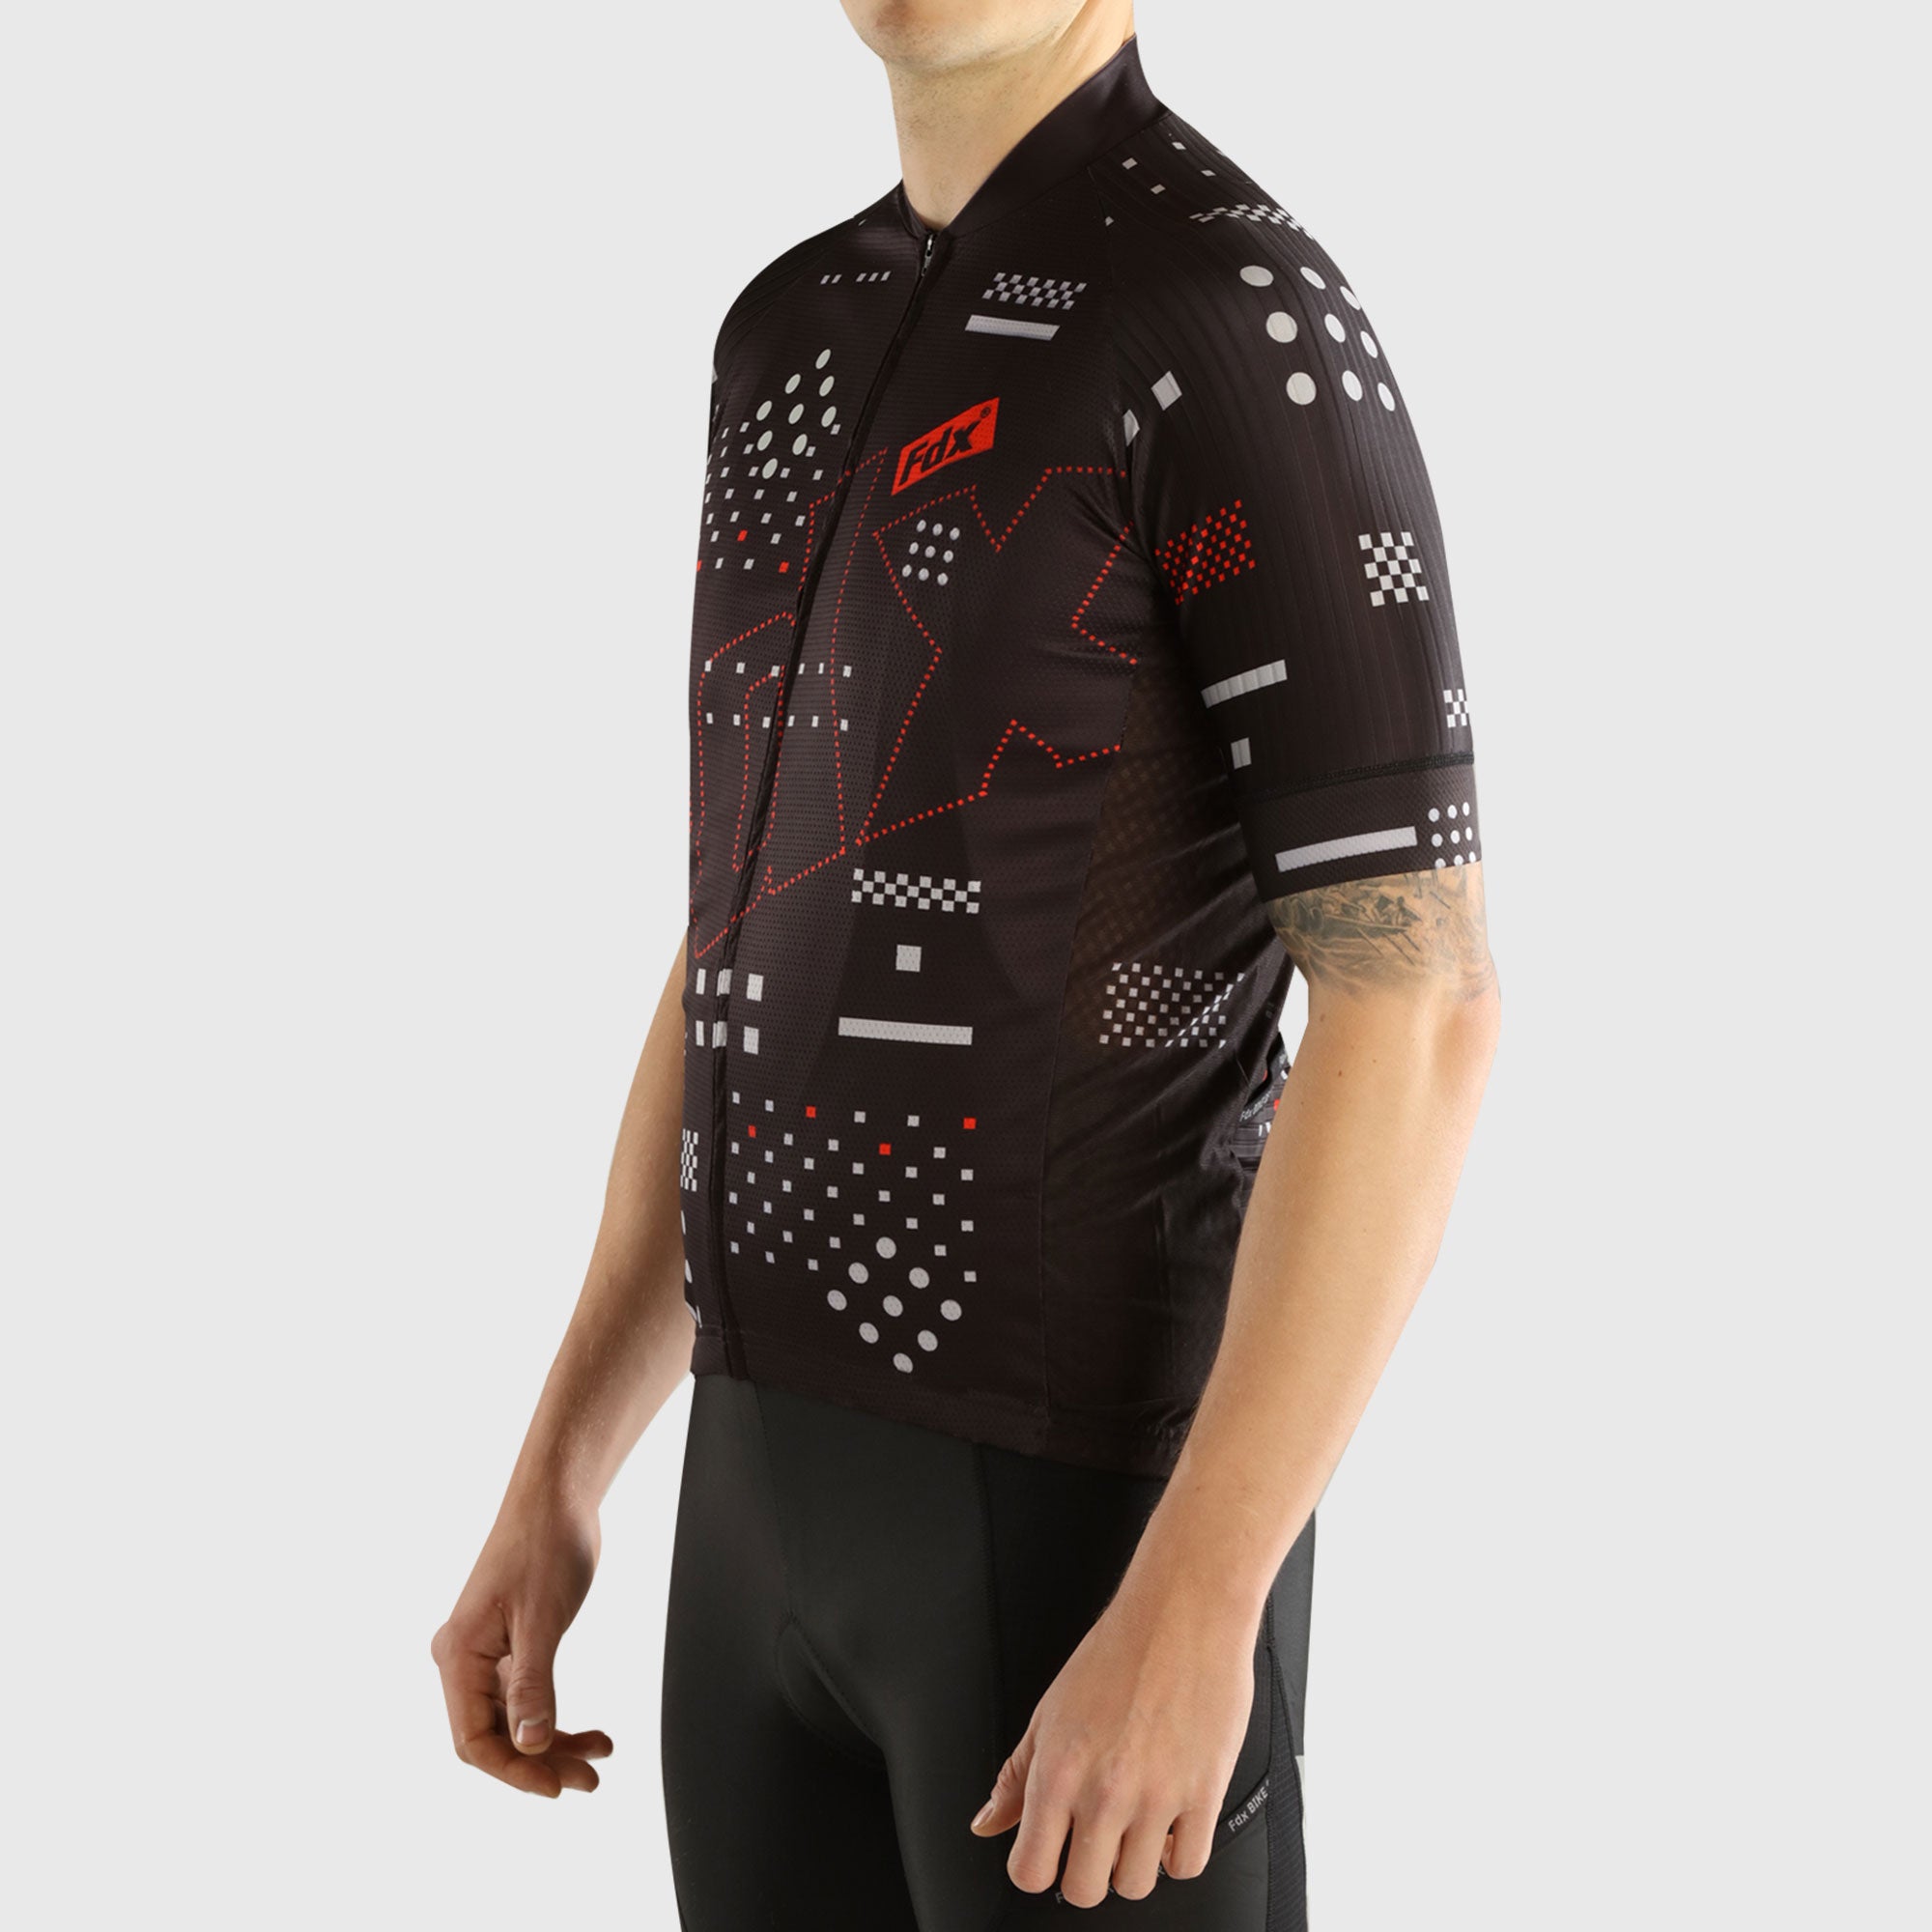 Fdx Mens Black Short Sleeve Cycling Jersey for Summer Best Road Bike Wear Top Light Weight, Full Zipper, Pockets & Hi-viz Reflectors - All Day